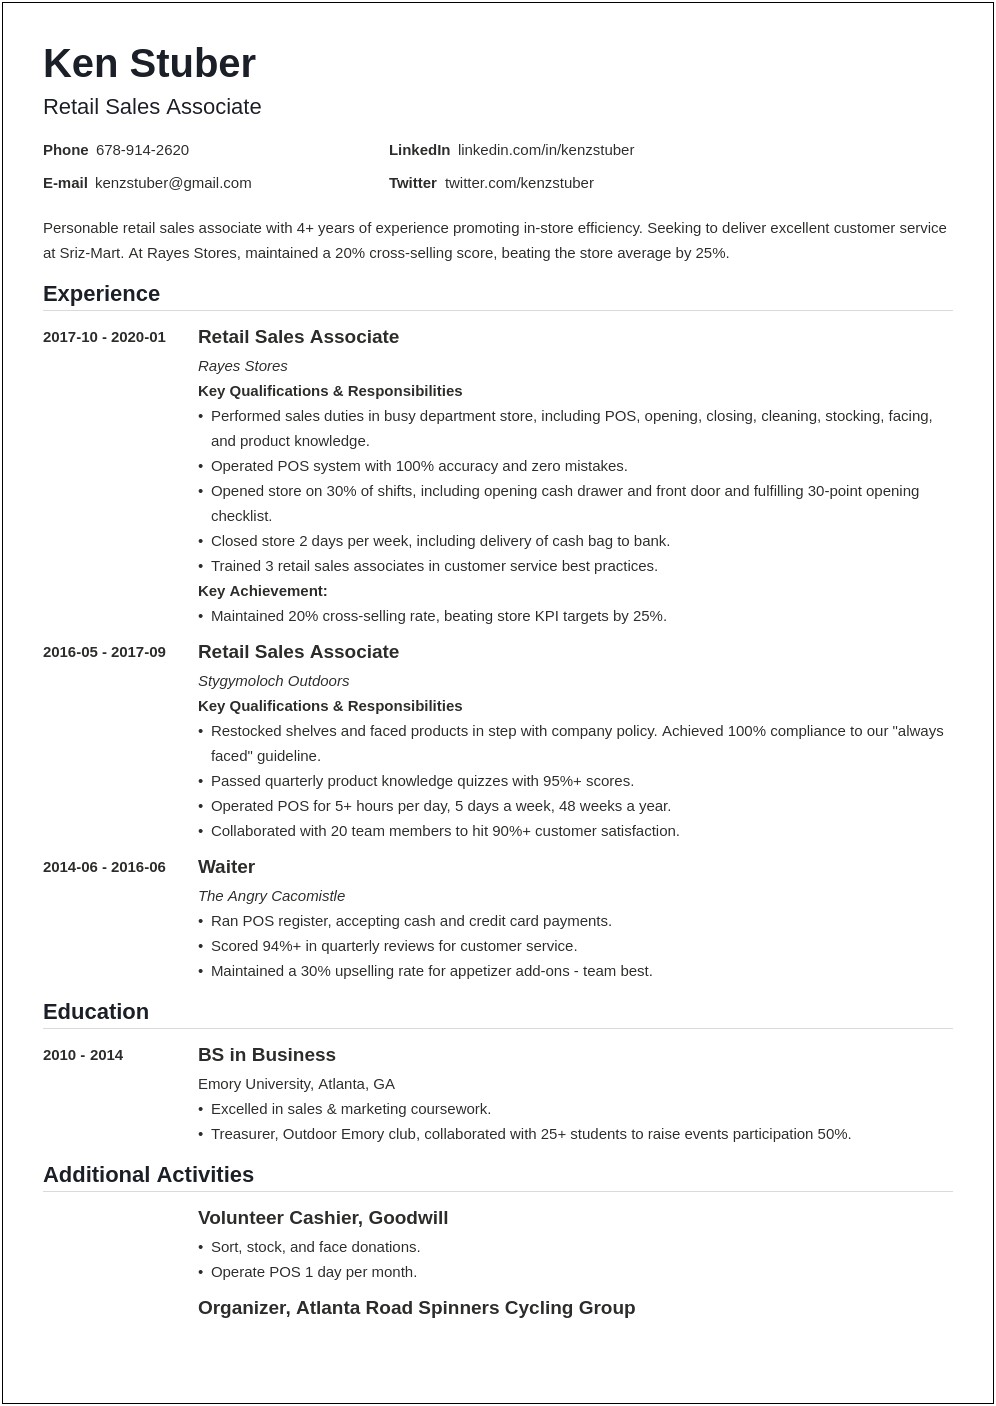 Resume Job Duties For Sales Associate